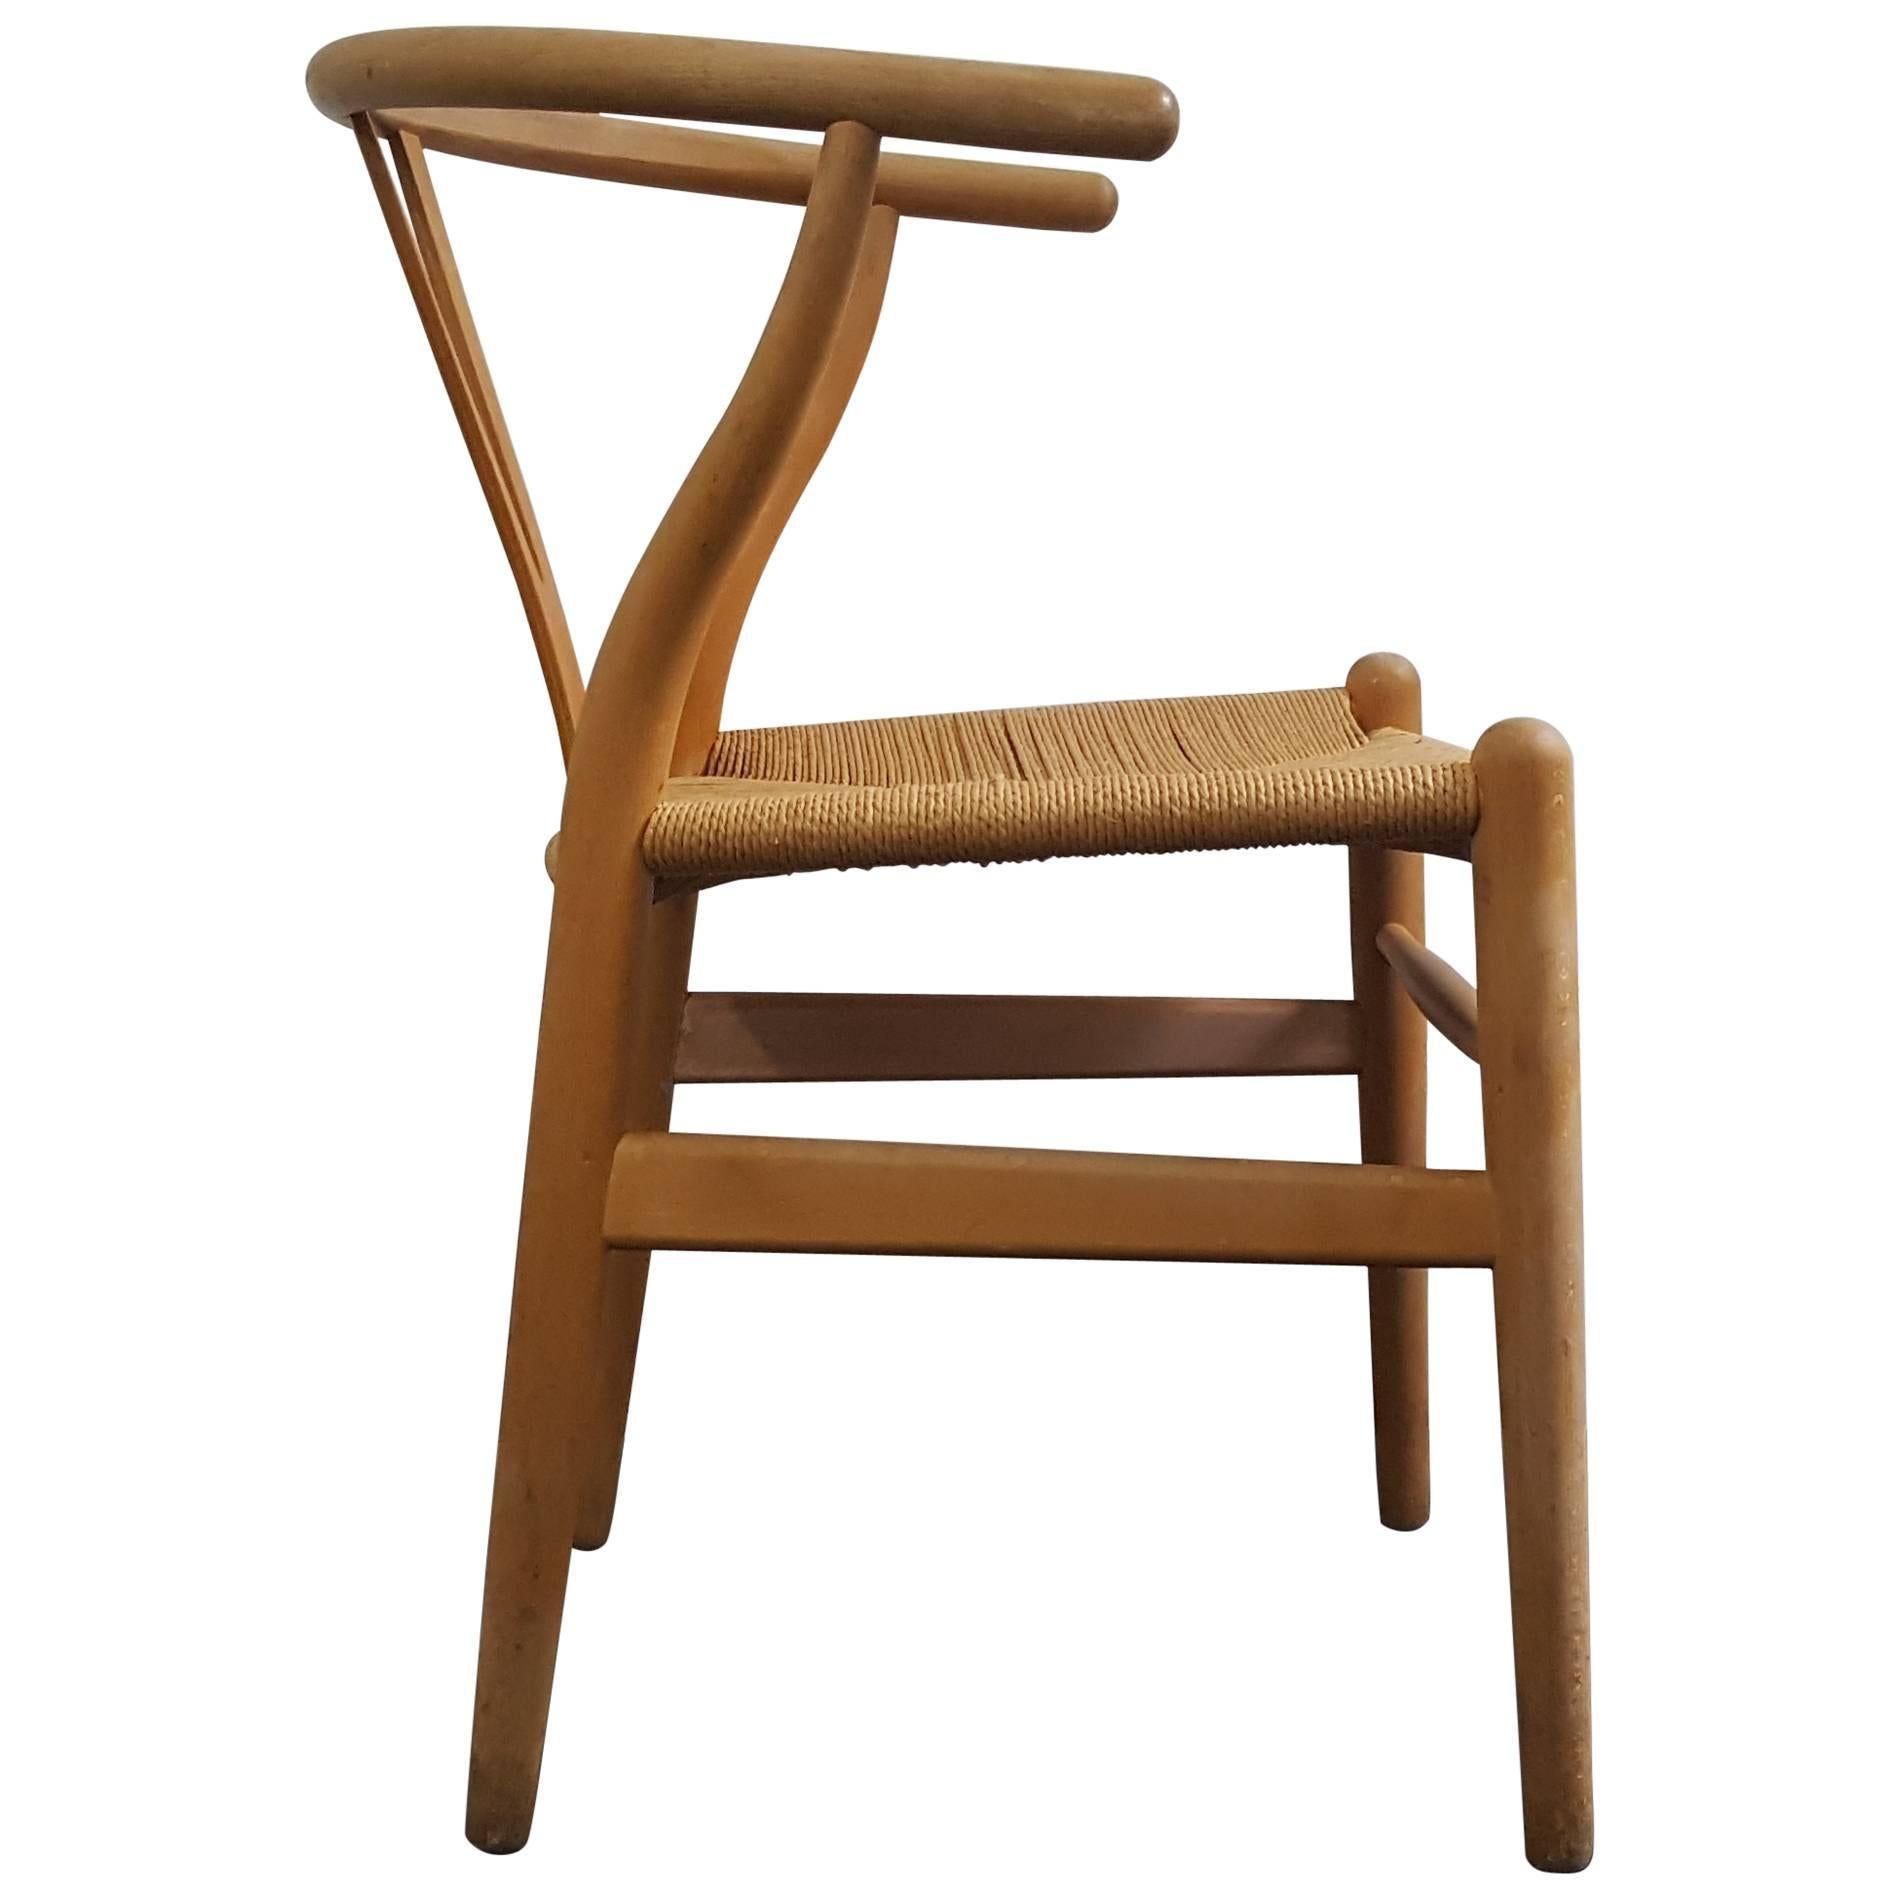 Iconic vintage Danish Hans J. Wegner CH24 'Wishbone' Chair